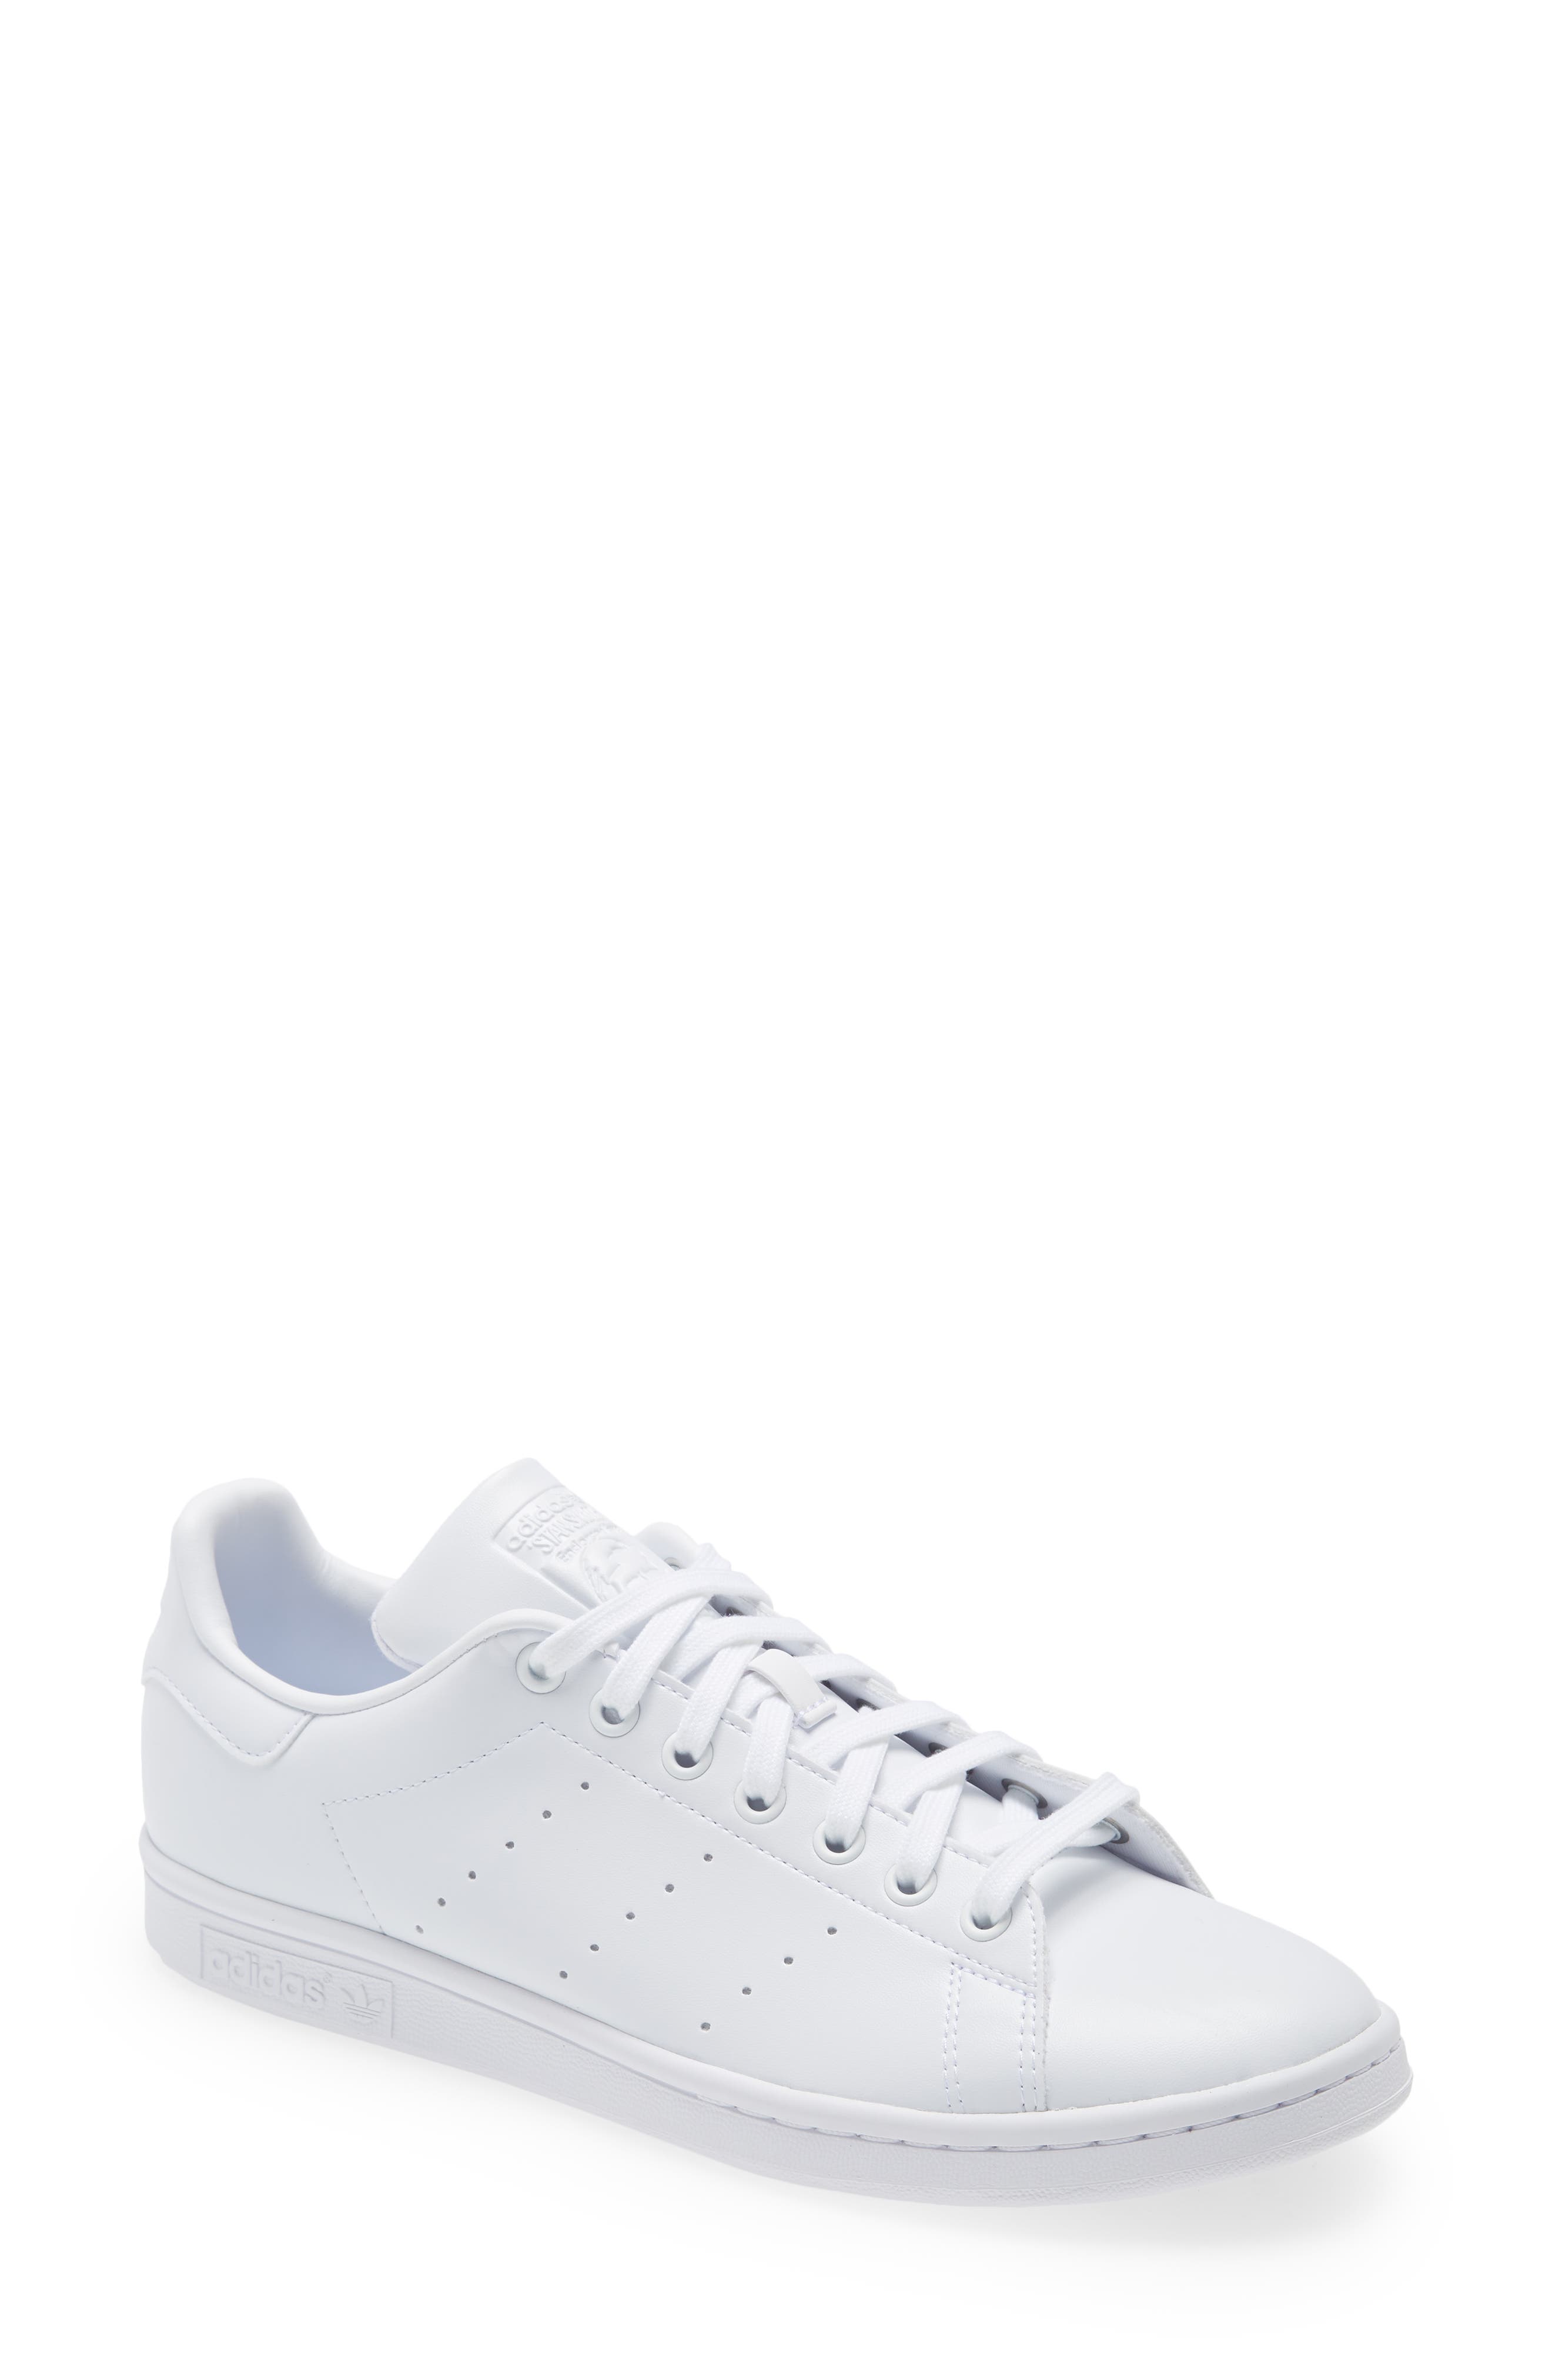 adidas sneakers white for men